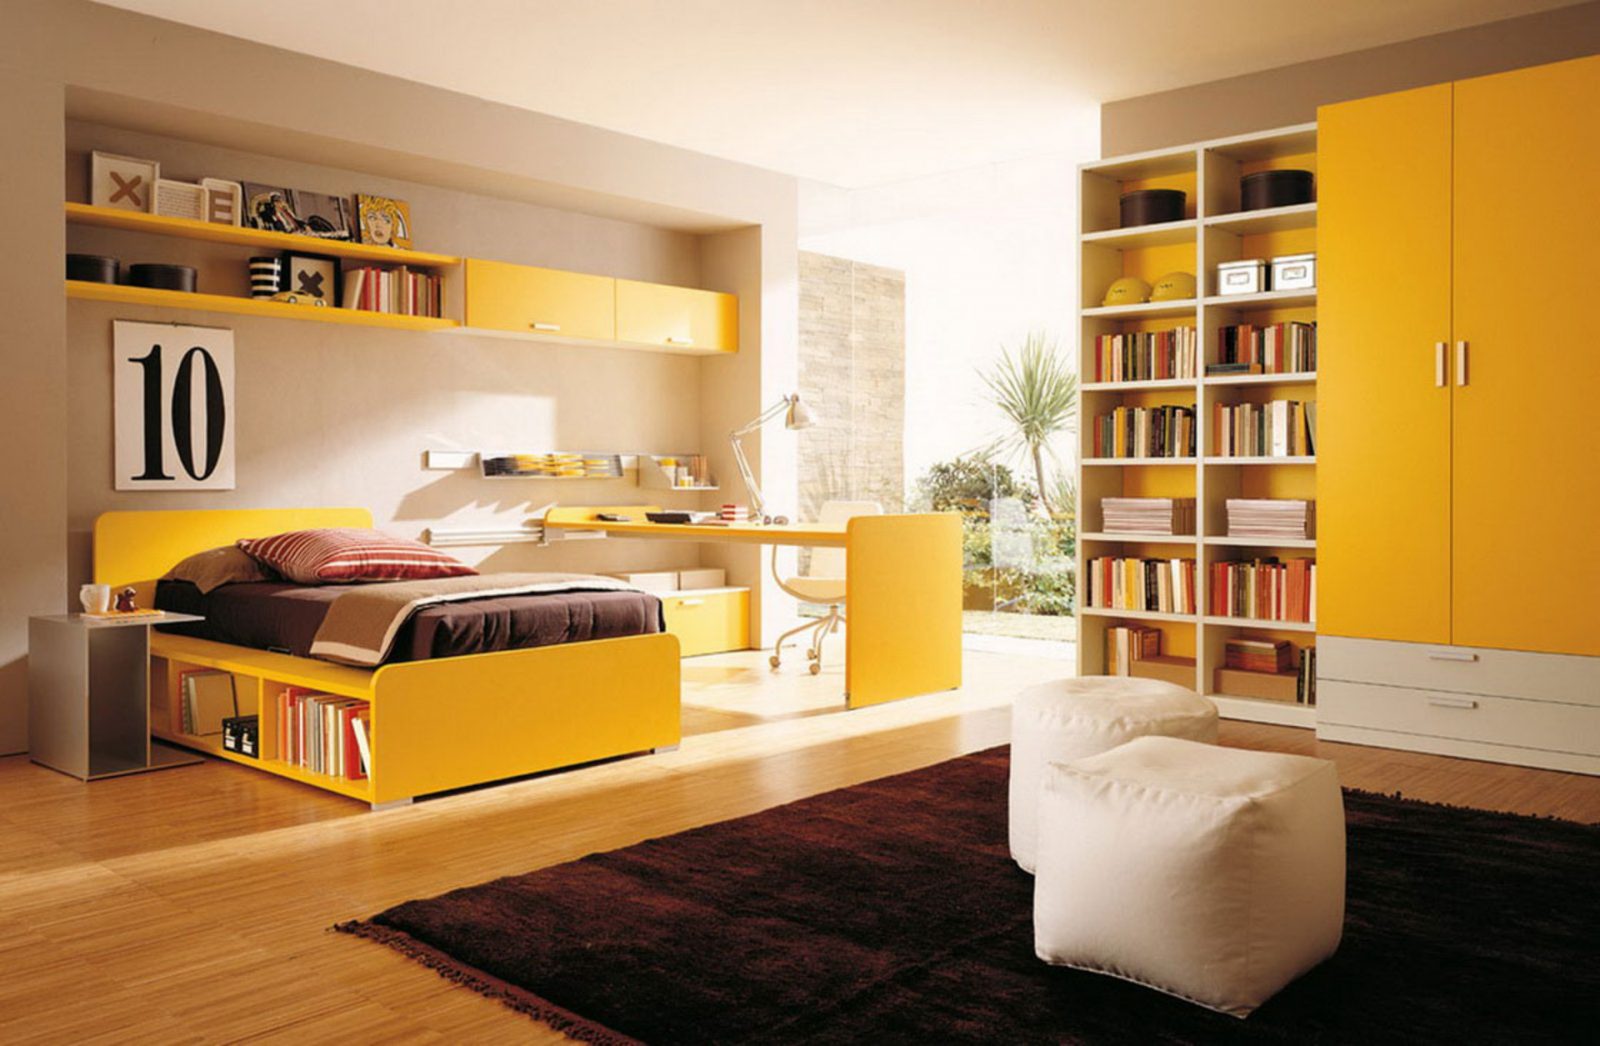 Dormitorio infantil amarillo